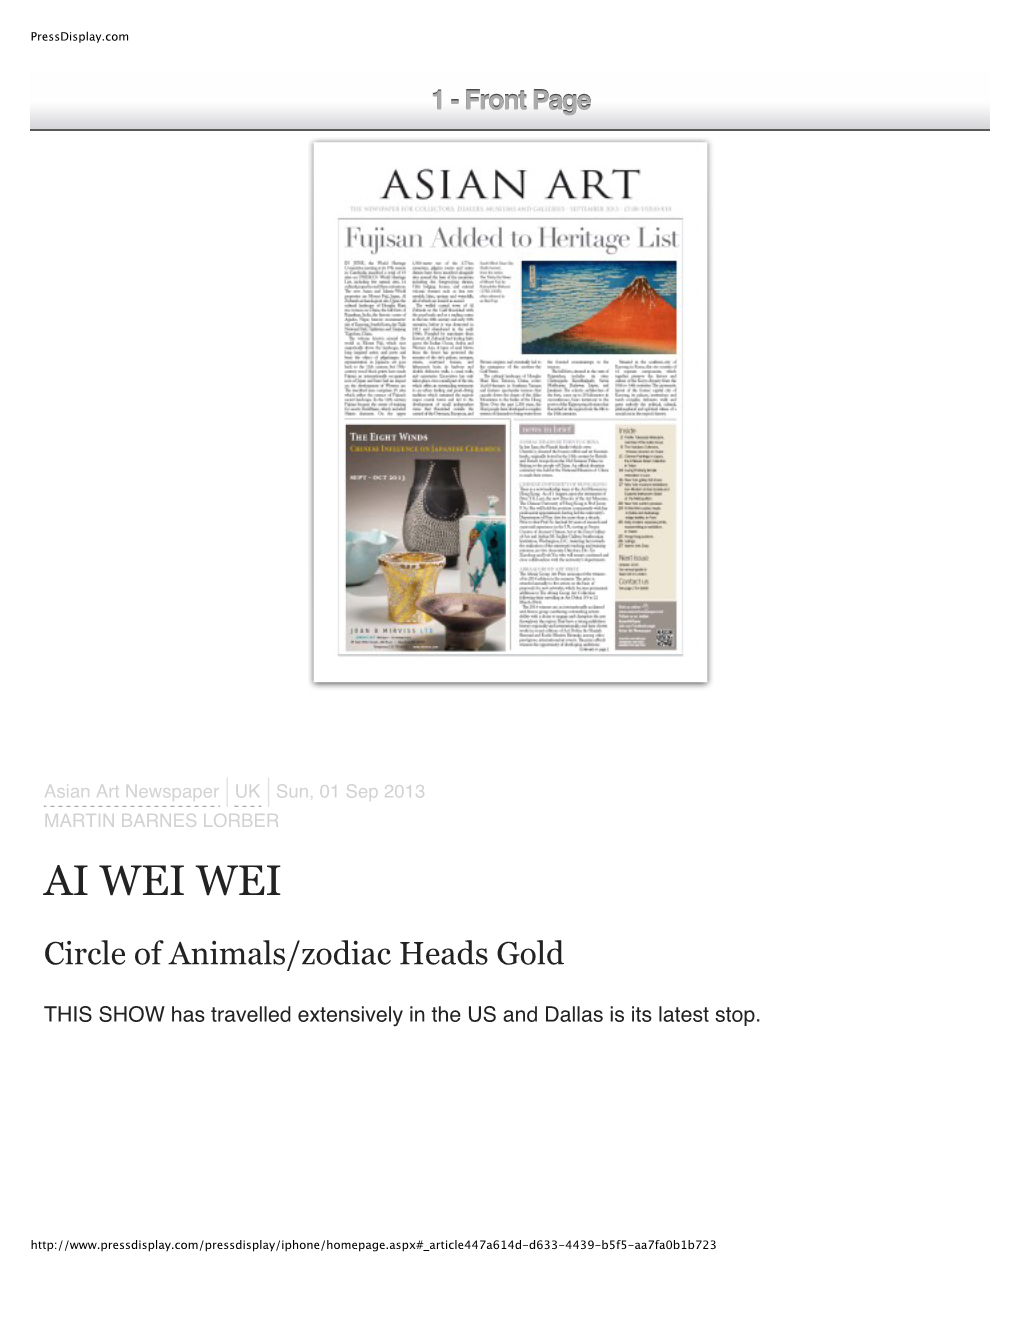 Ai Weiwei: Circle of Animals/Zodiac Heads Gold, Asian Art Newspaper UK